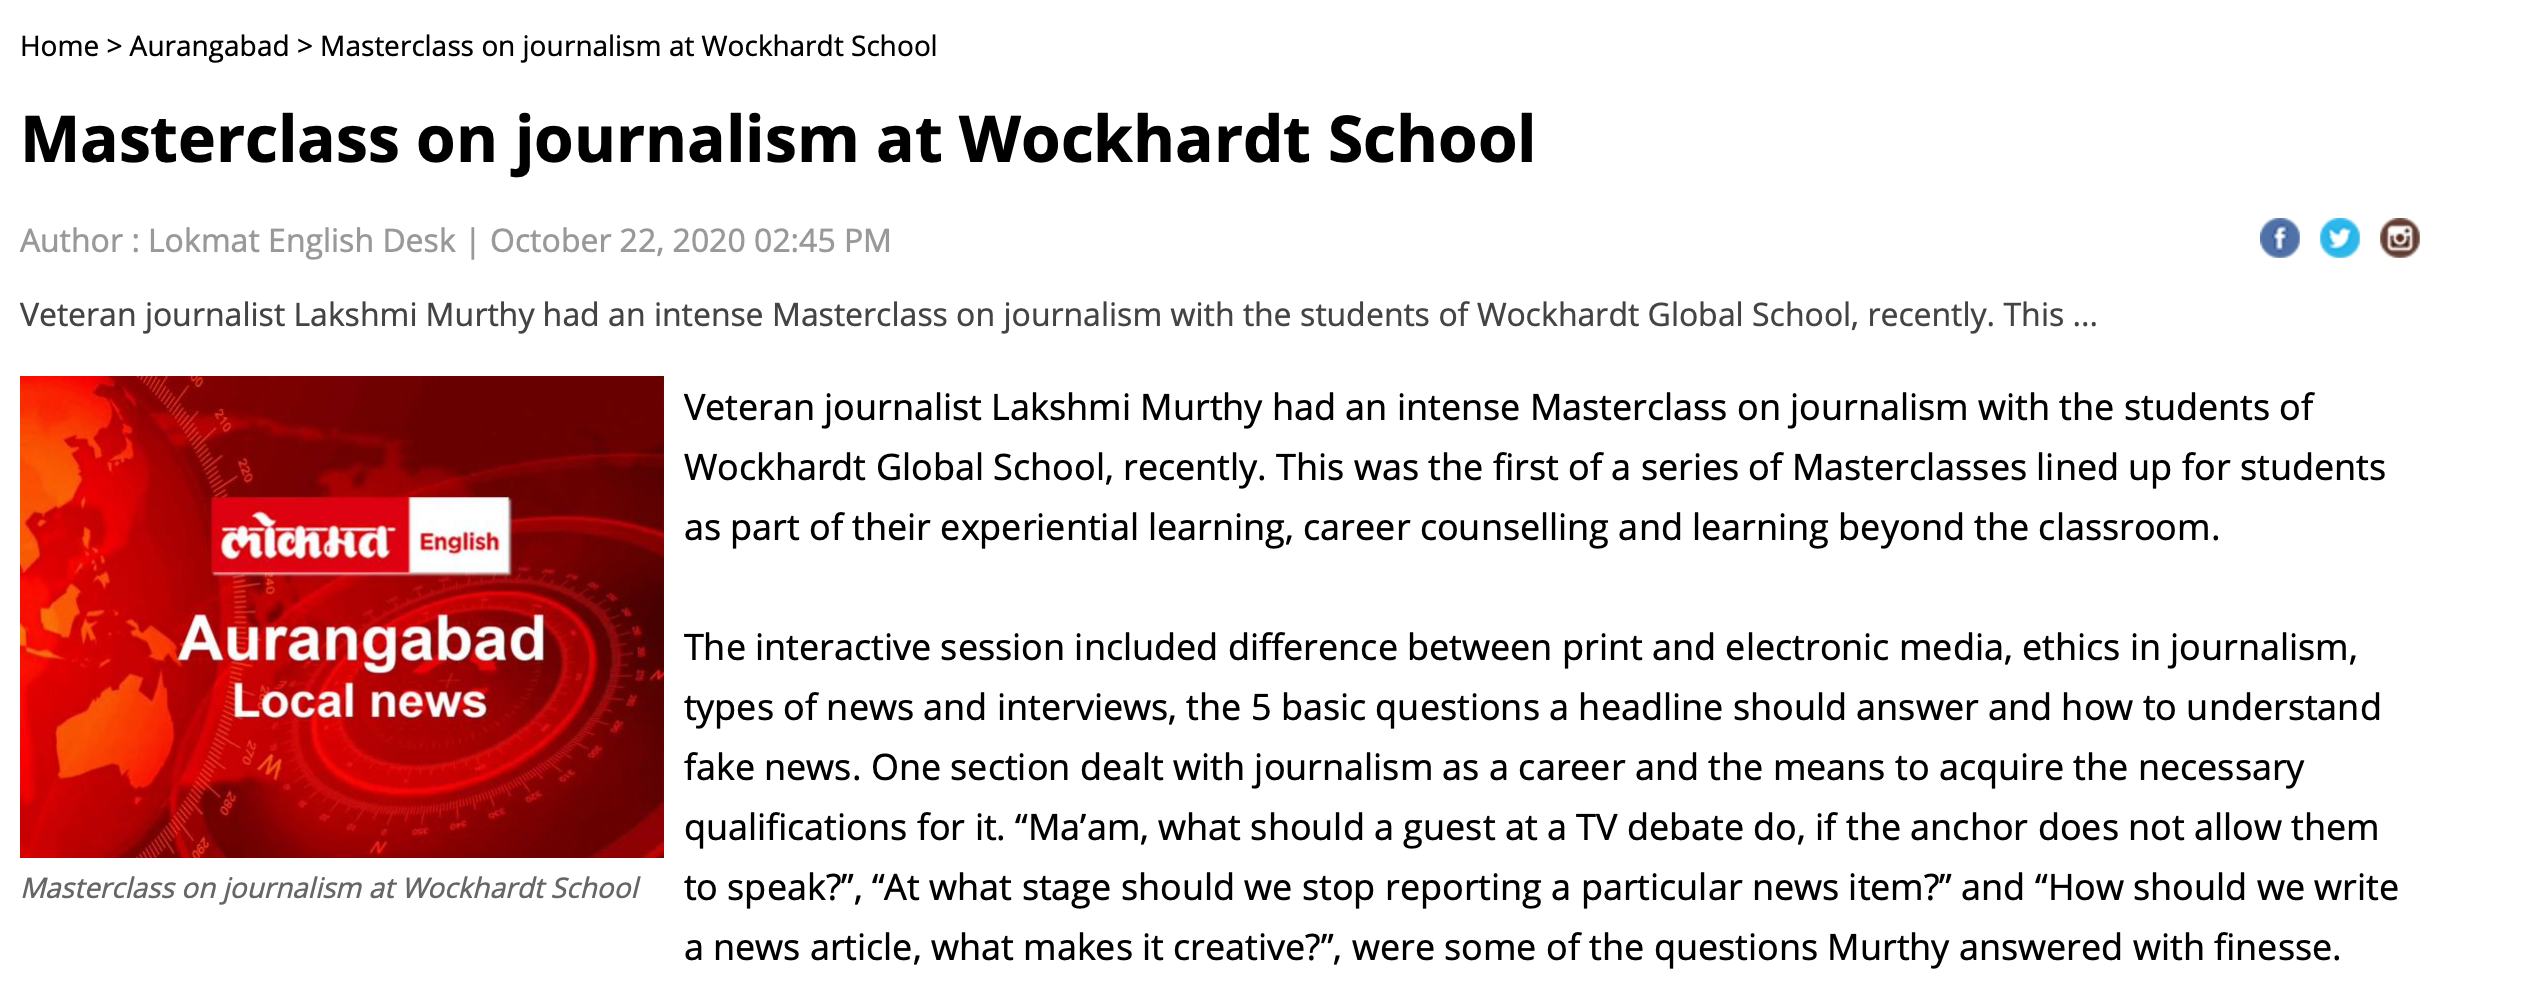 https://english.lokmat.com/aurangabad/masterclass-on-journalism-at-wockhardt-school/